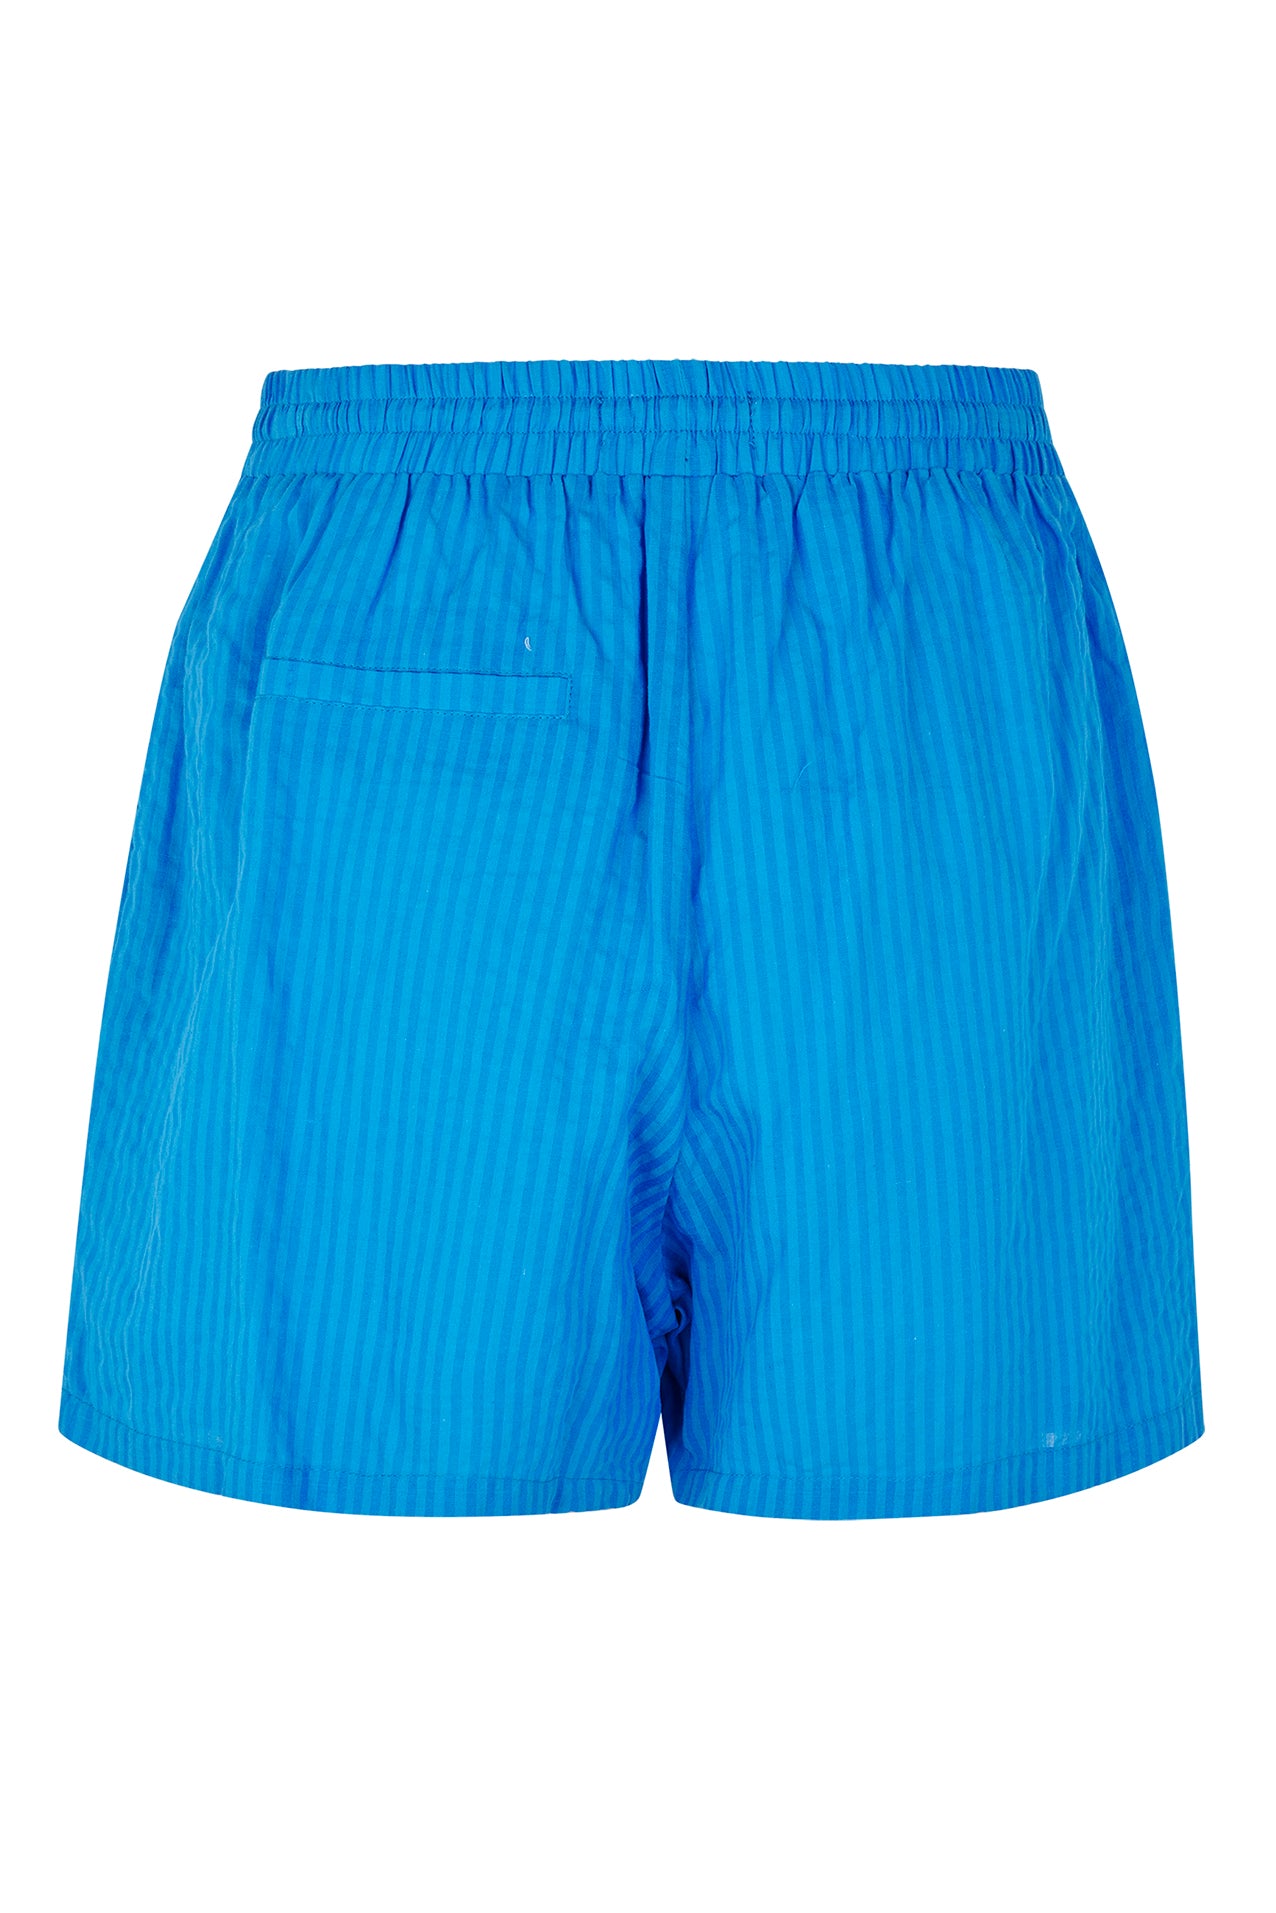 Lollys Laundry RitaLL shorts Pants 20 Blue